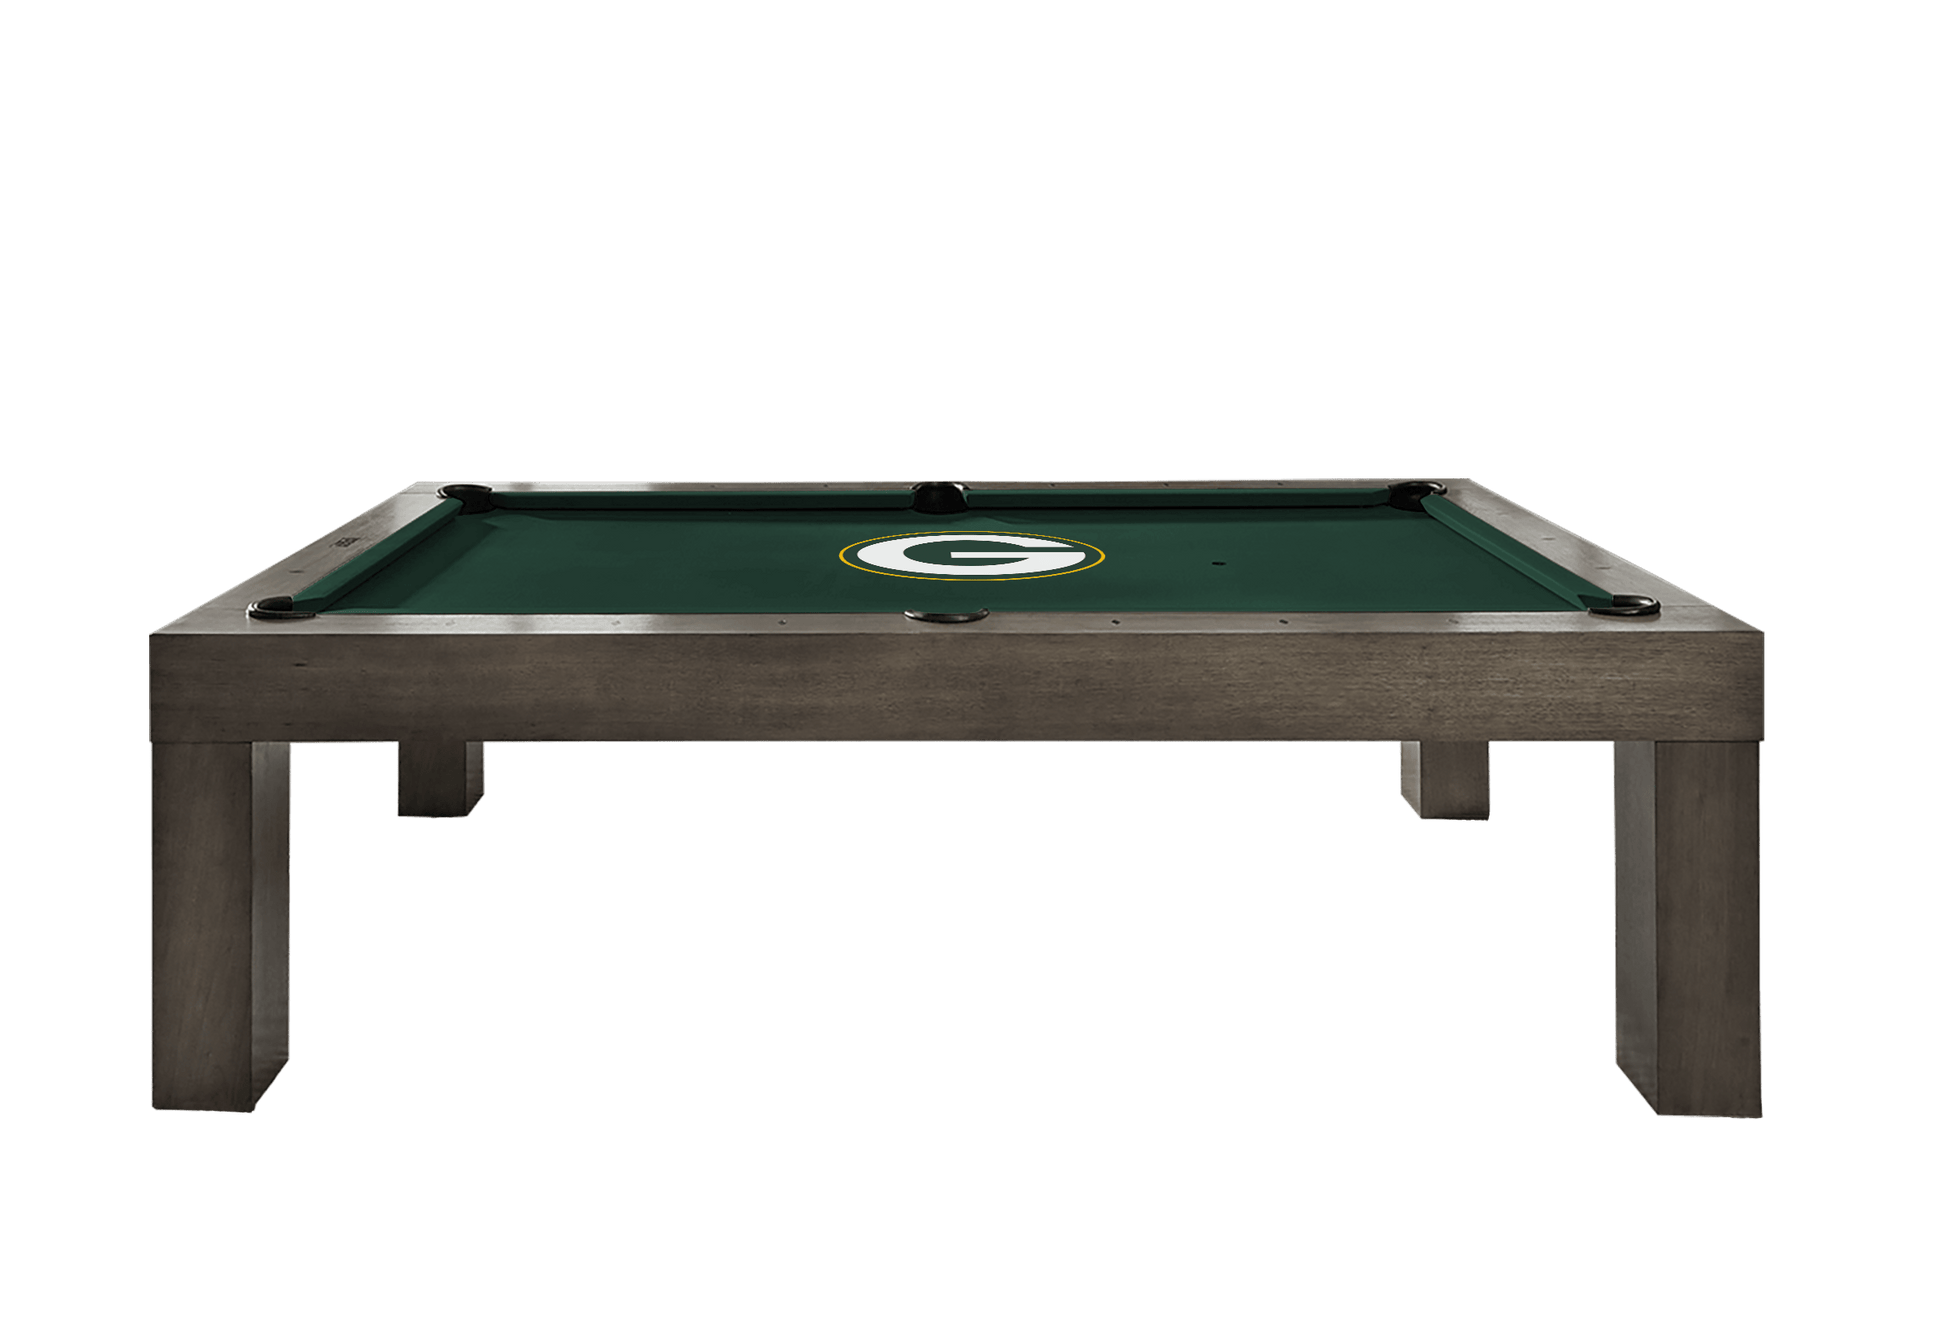 Green Bay Packers Premium Pool Table Bundle - Charcoal Pool Bundle Home Arcade Games   